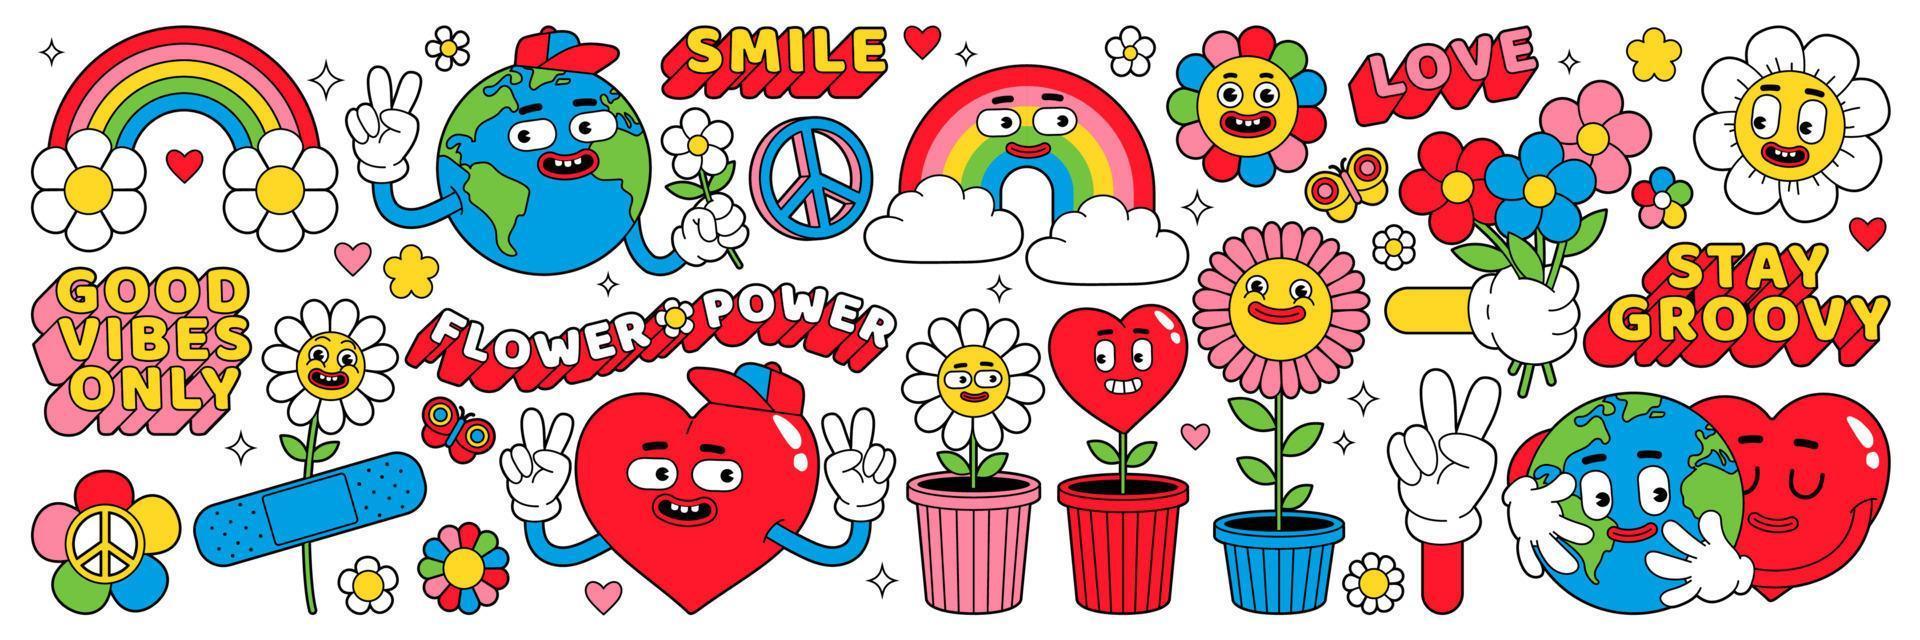 paquete de pegatinas maravilloso en estilo de dibujos animados retro de moda. graciosa tierra feliz, arcoiris, corazón, flor, margarita. vector